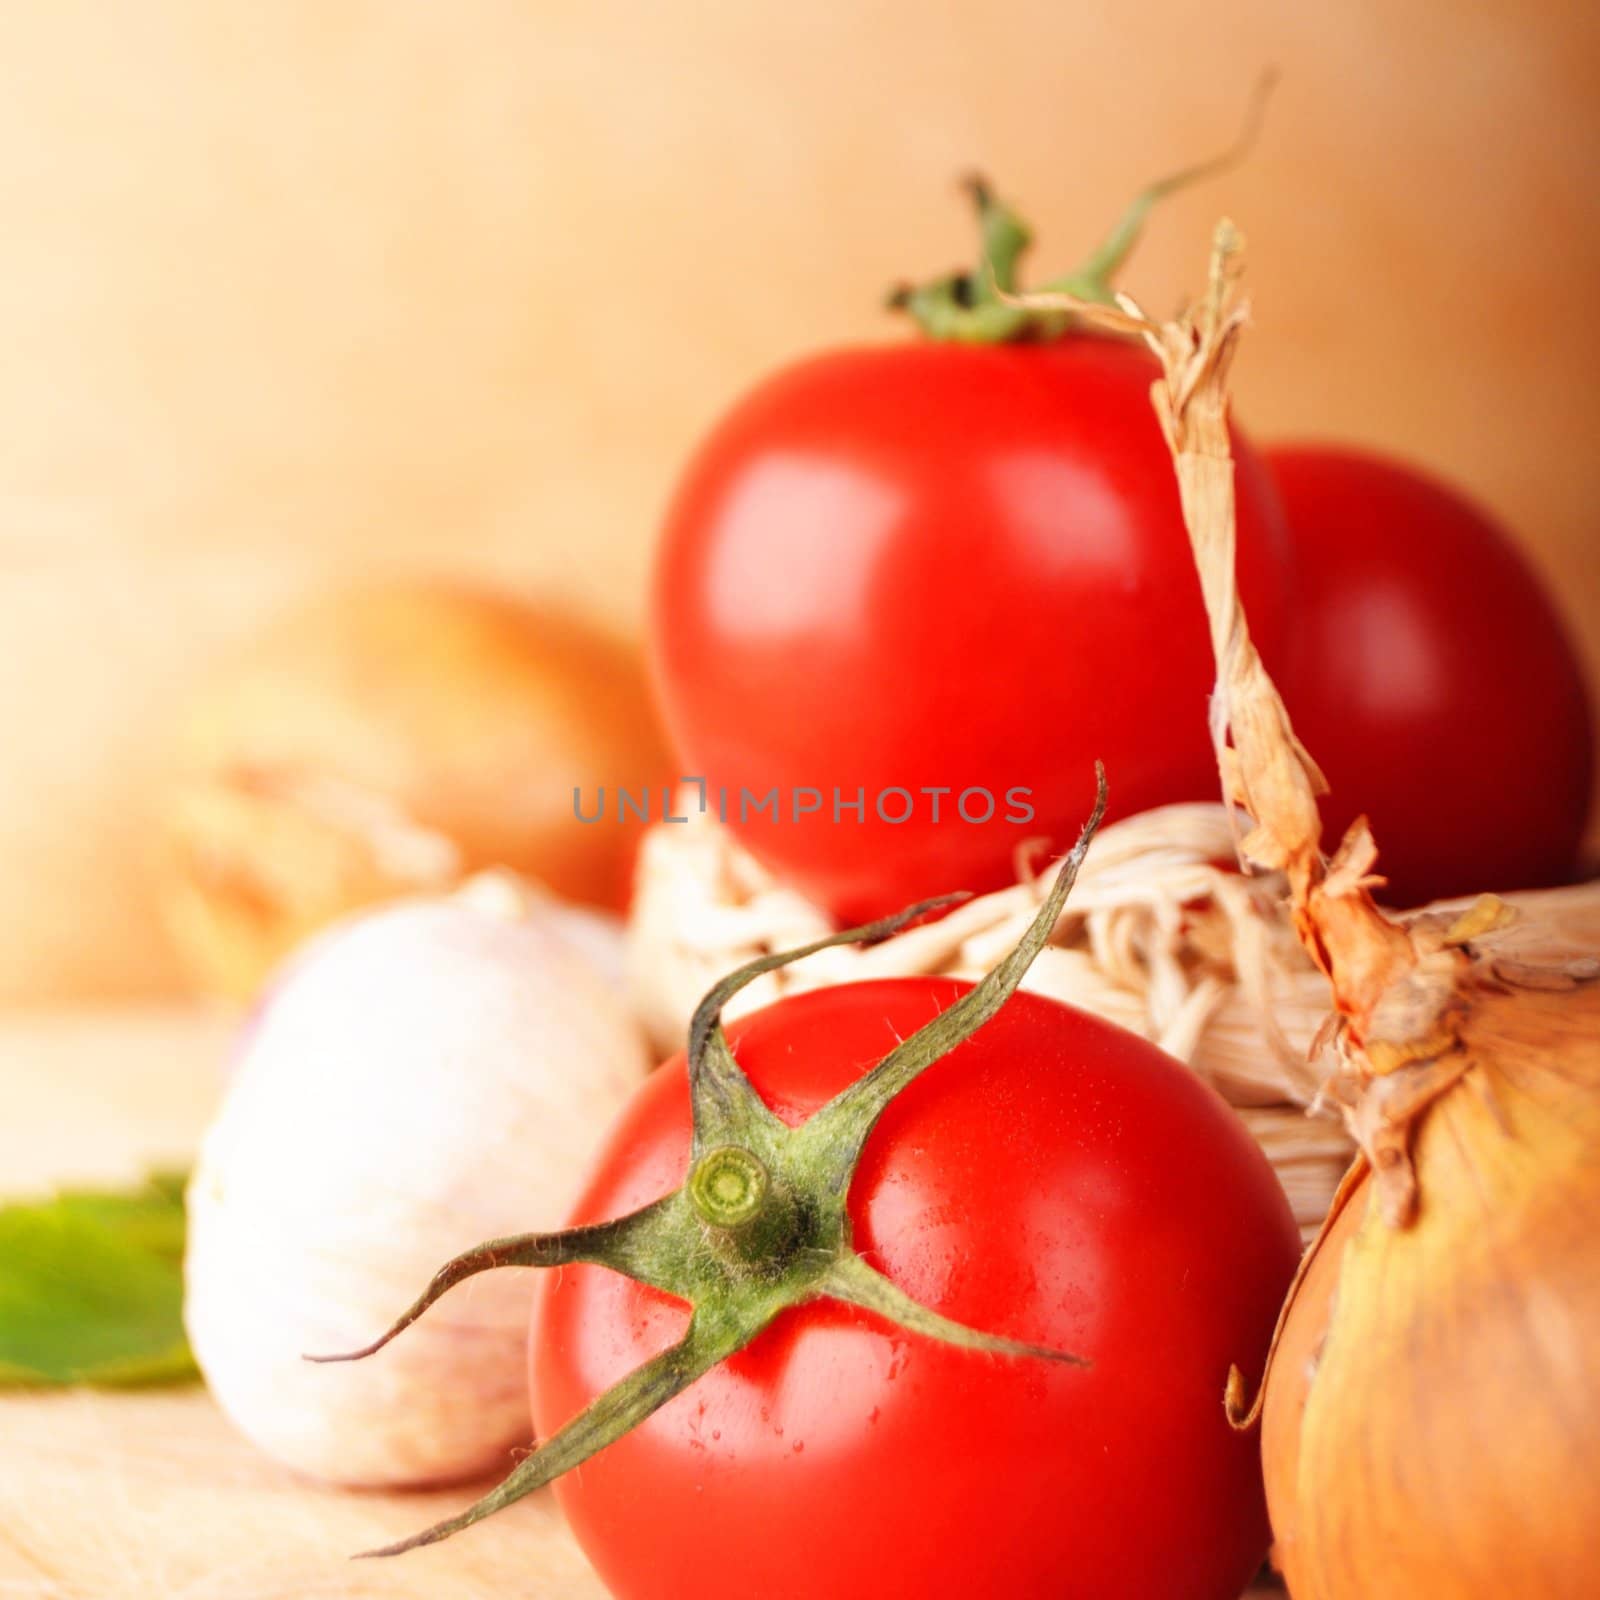 tomatoes by gunnar3000